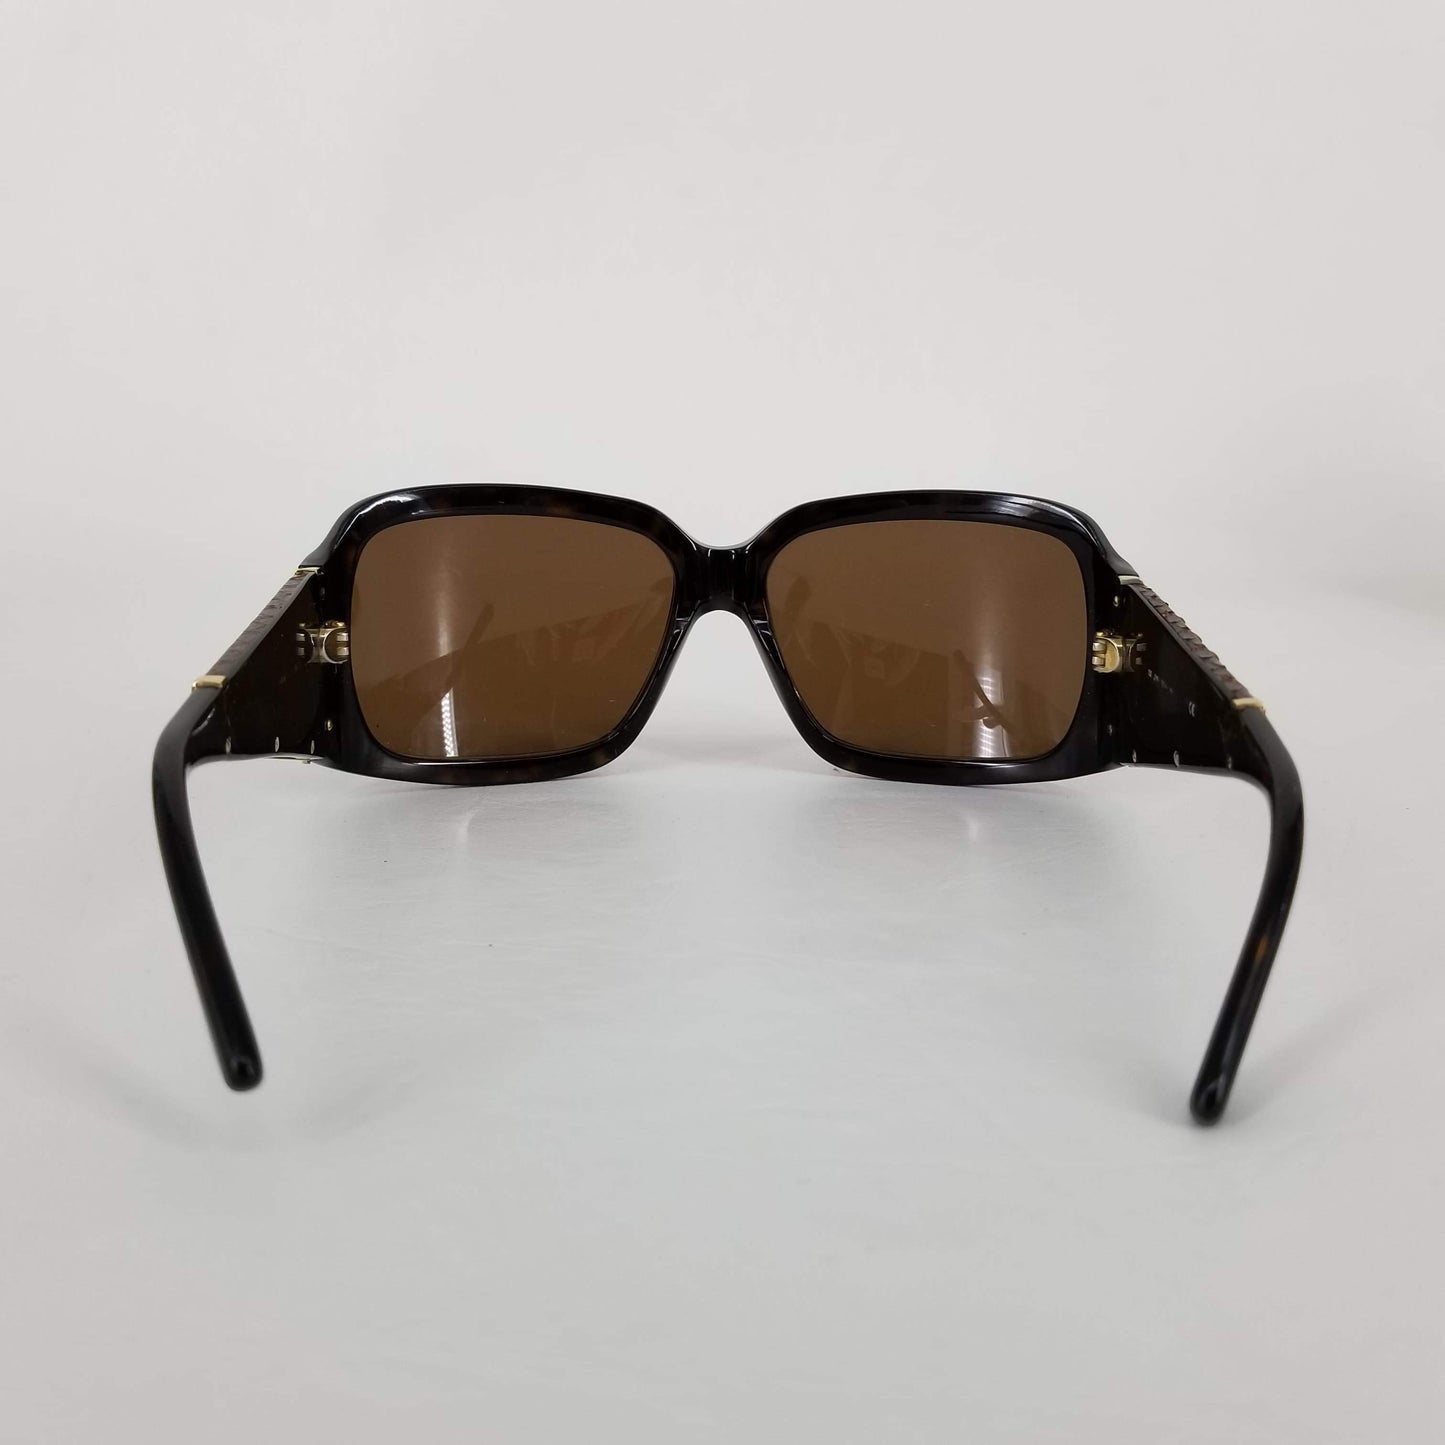 Authentic Jimmy Choo Snakeskin Trim Sunglasses